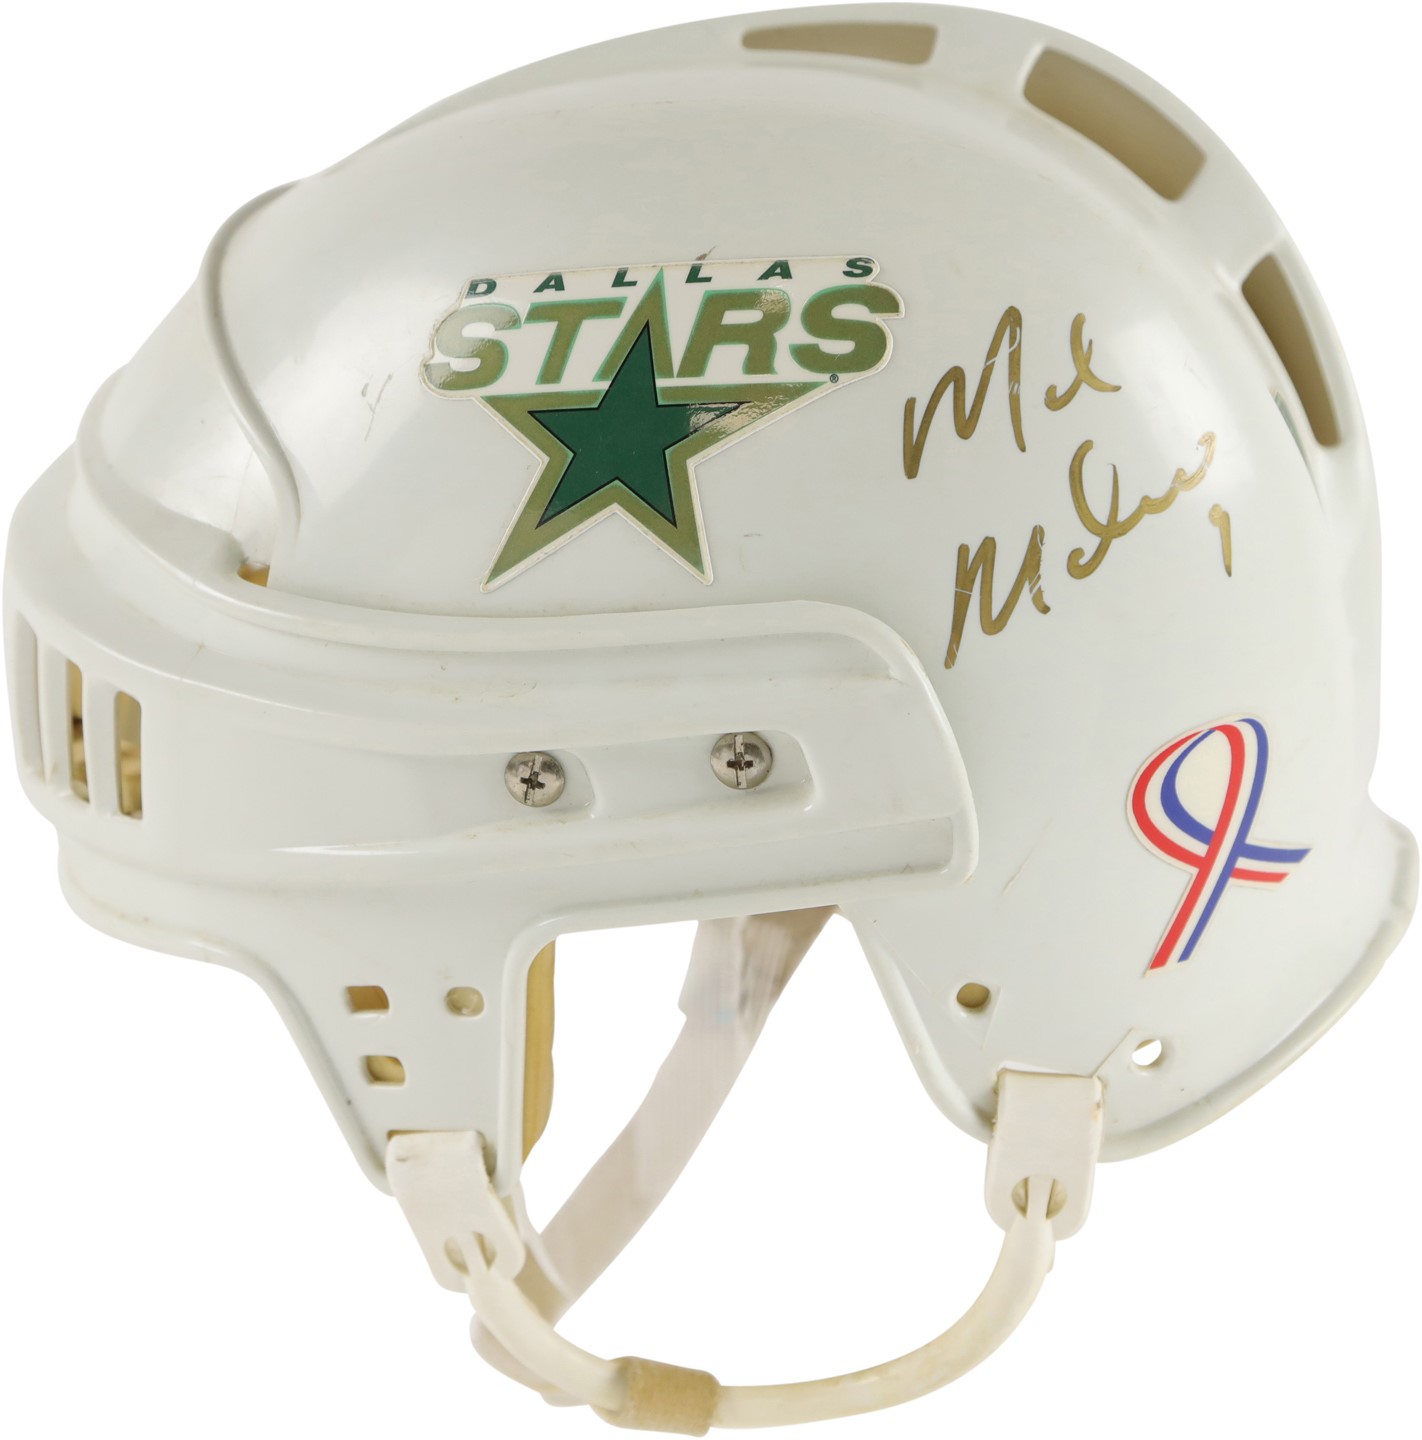 1998-99 Mike Modano Dallas Stars Signed Game Worn Helmet - Stanley Cup Championship Season